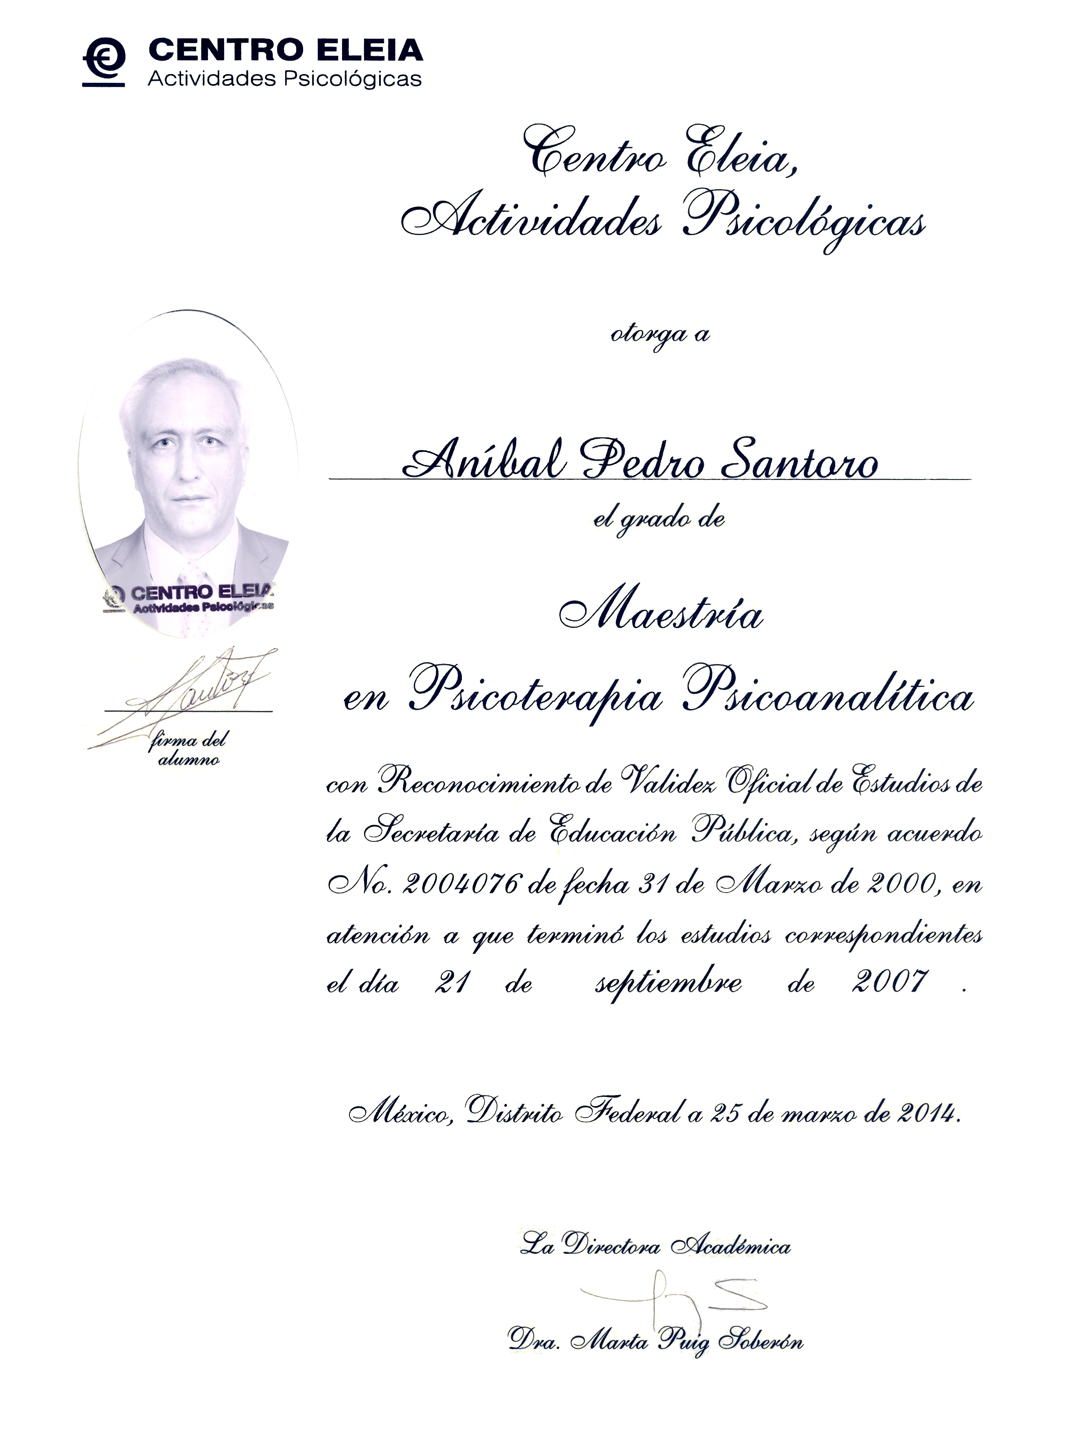 Dr. Aníbal P Santoro - Psychoanaly Psychotherapy Master's Degree #1